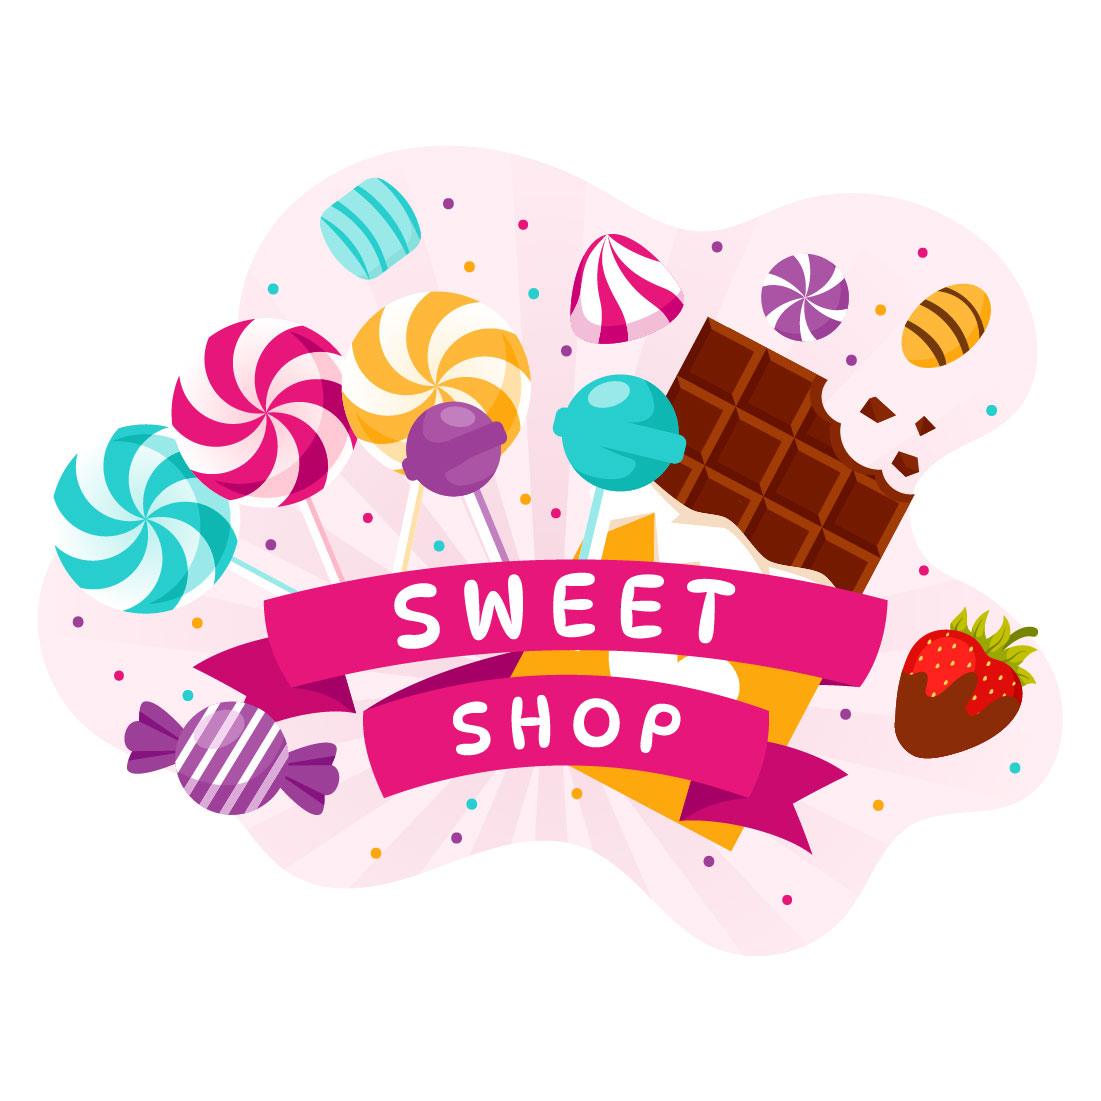 12 Sweet Shop Illustration preview image.